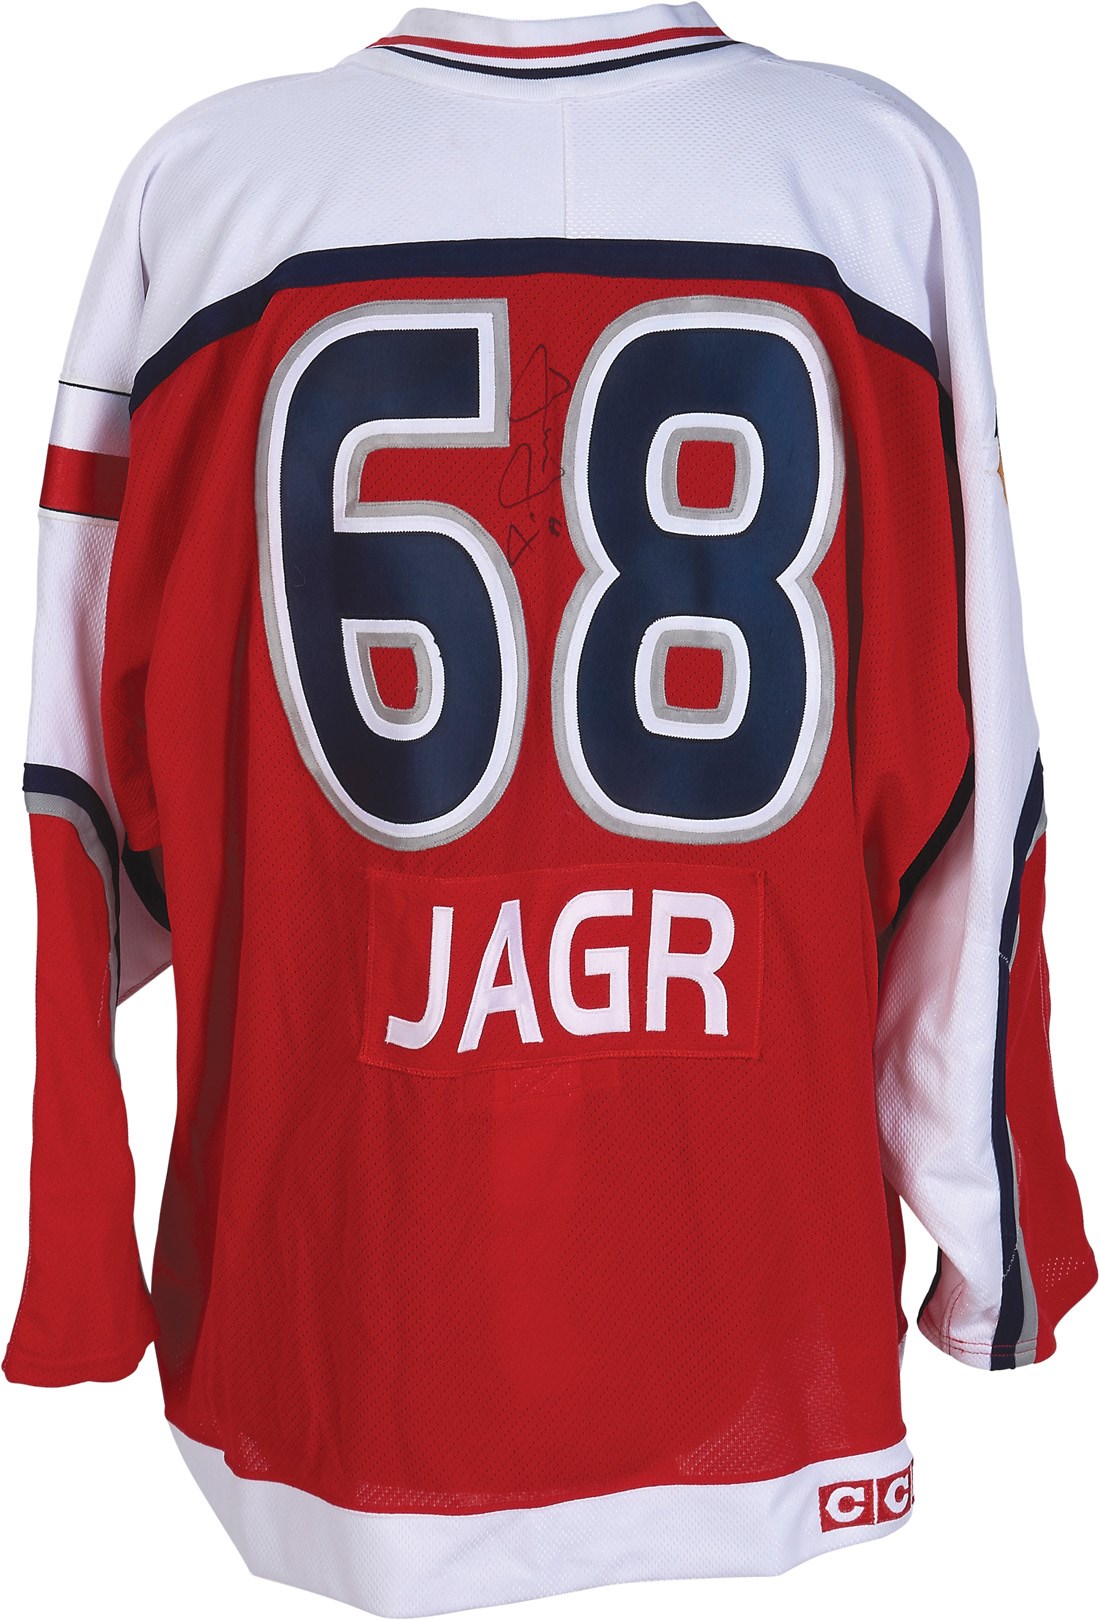 1999-2000 Jaromir Jagr All-Star Game Worn Uniform and Helmet